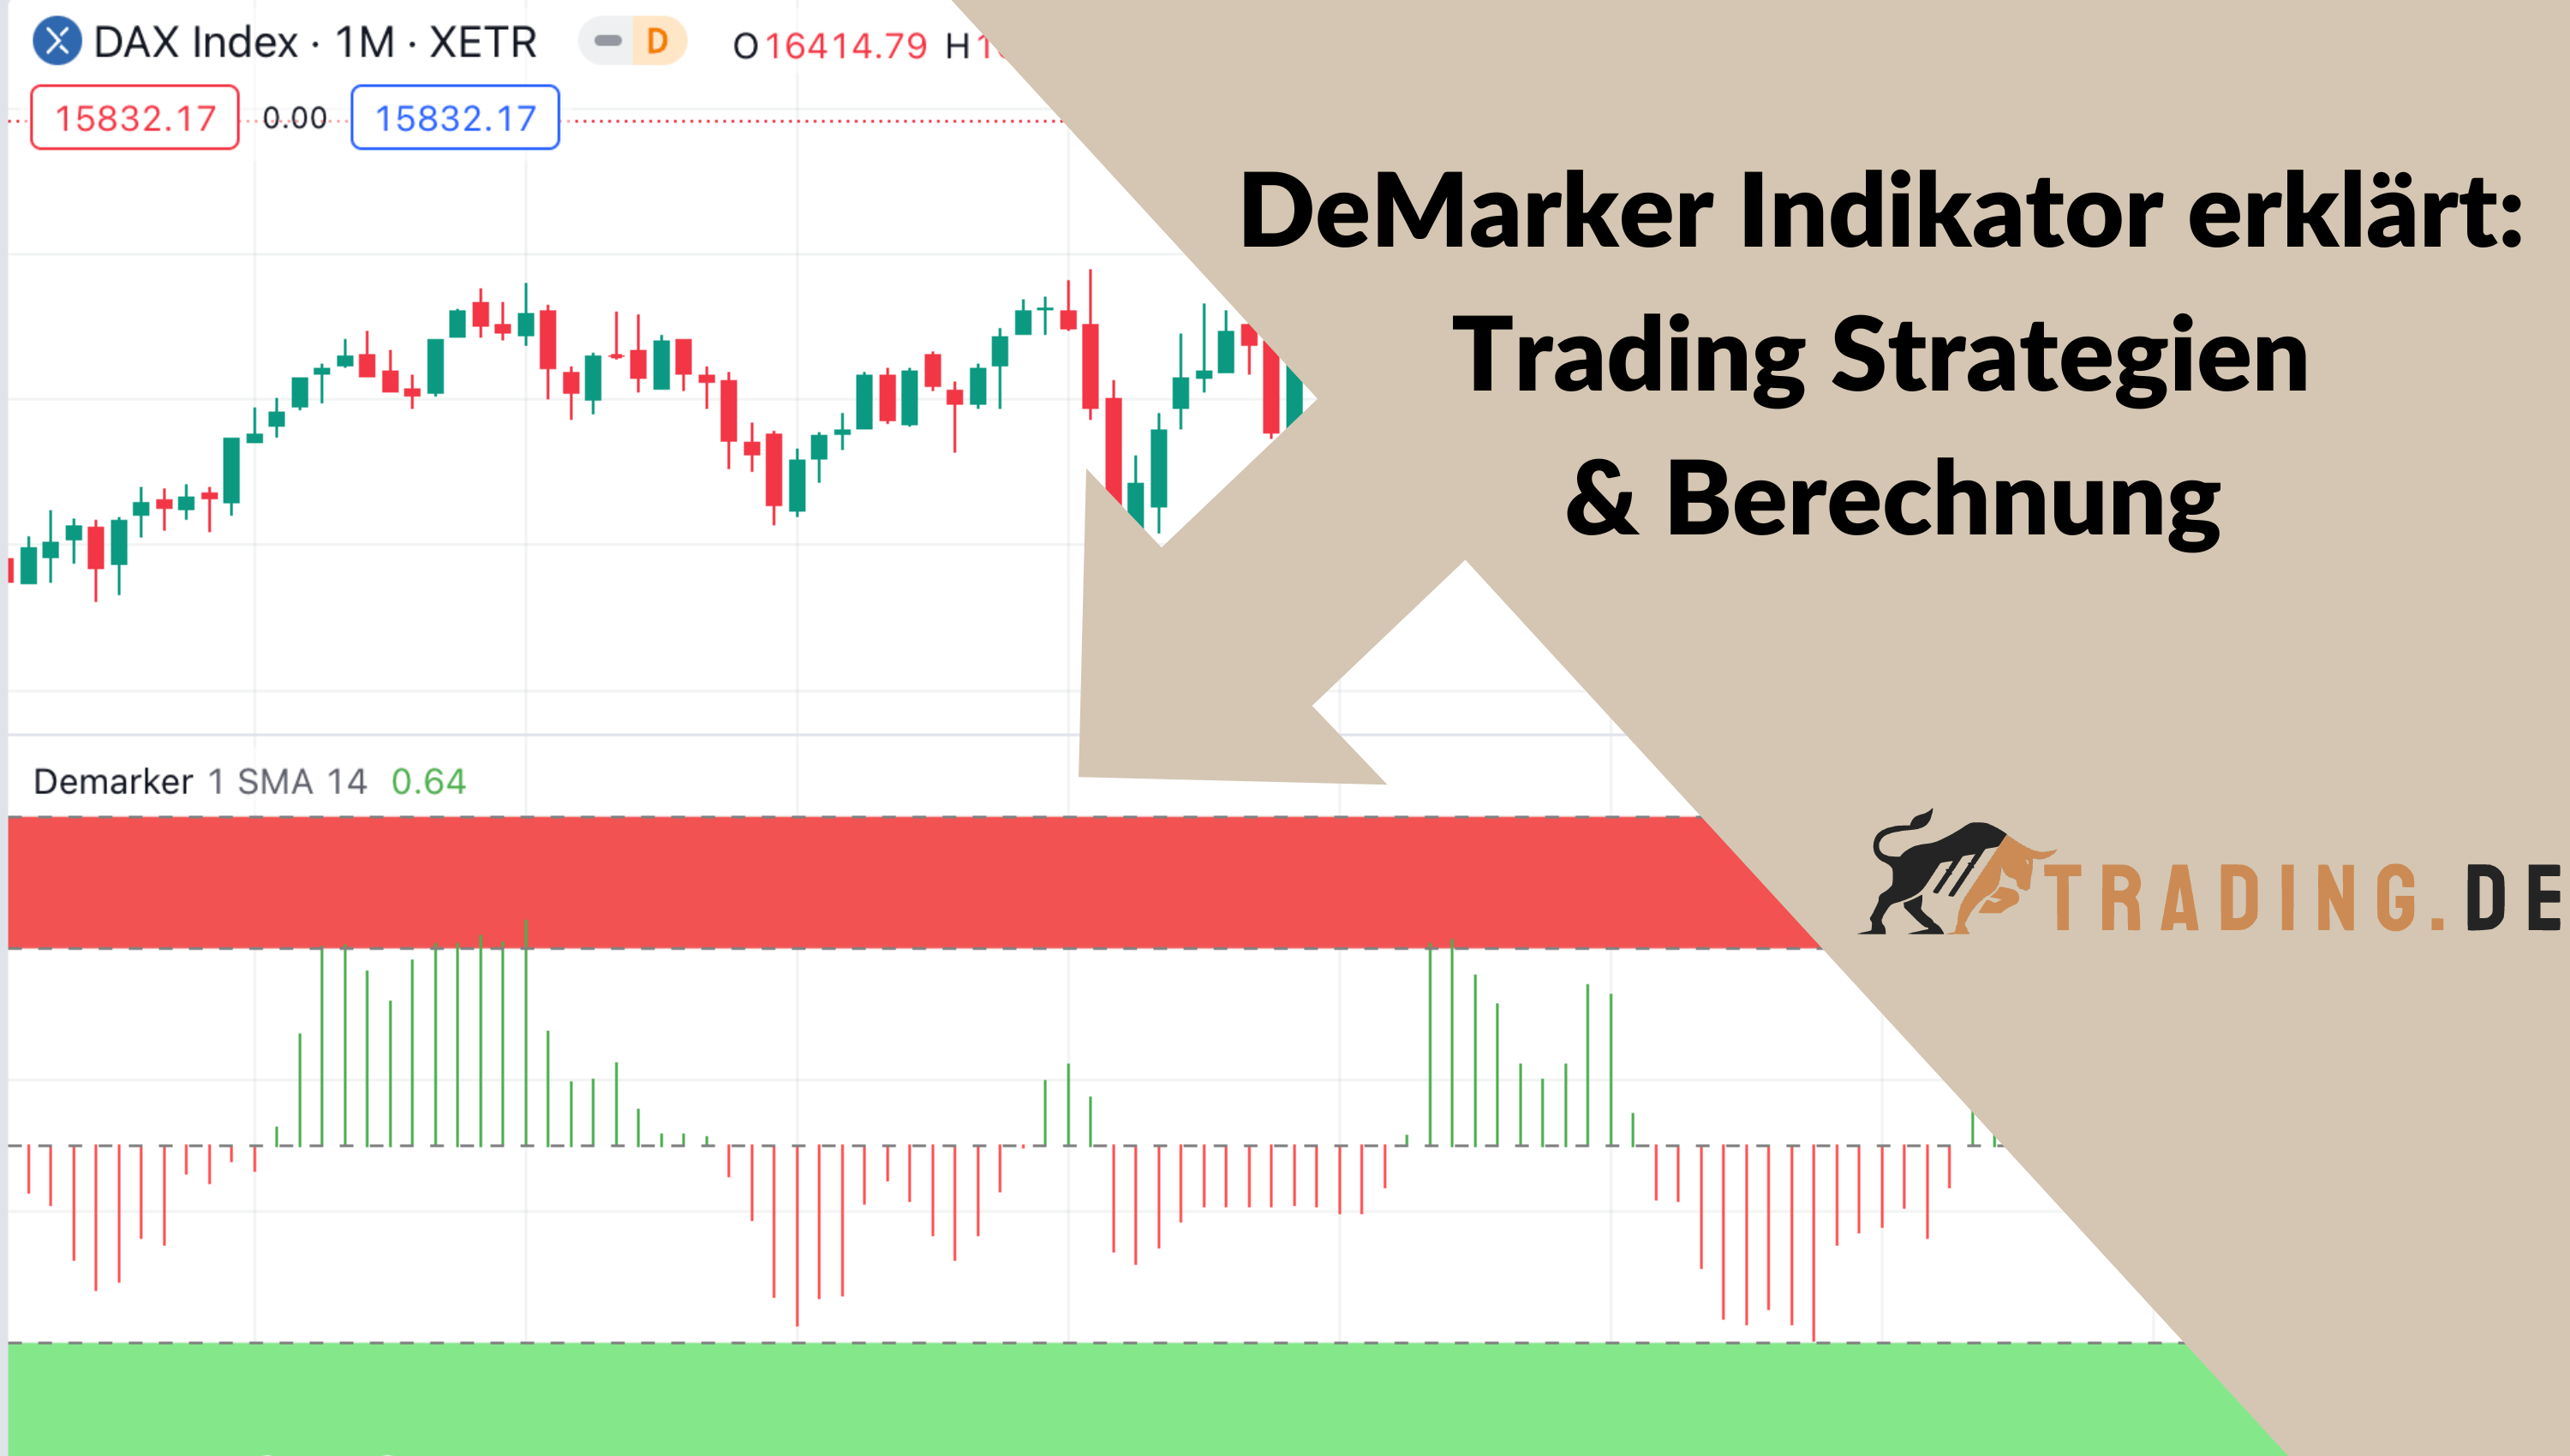 DeMarker Indikator erklärt: Trading Strategien & Berechnung